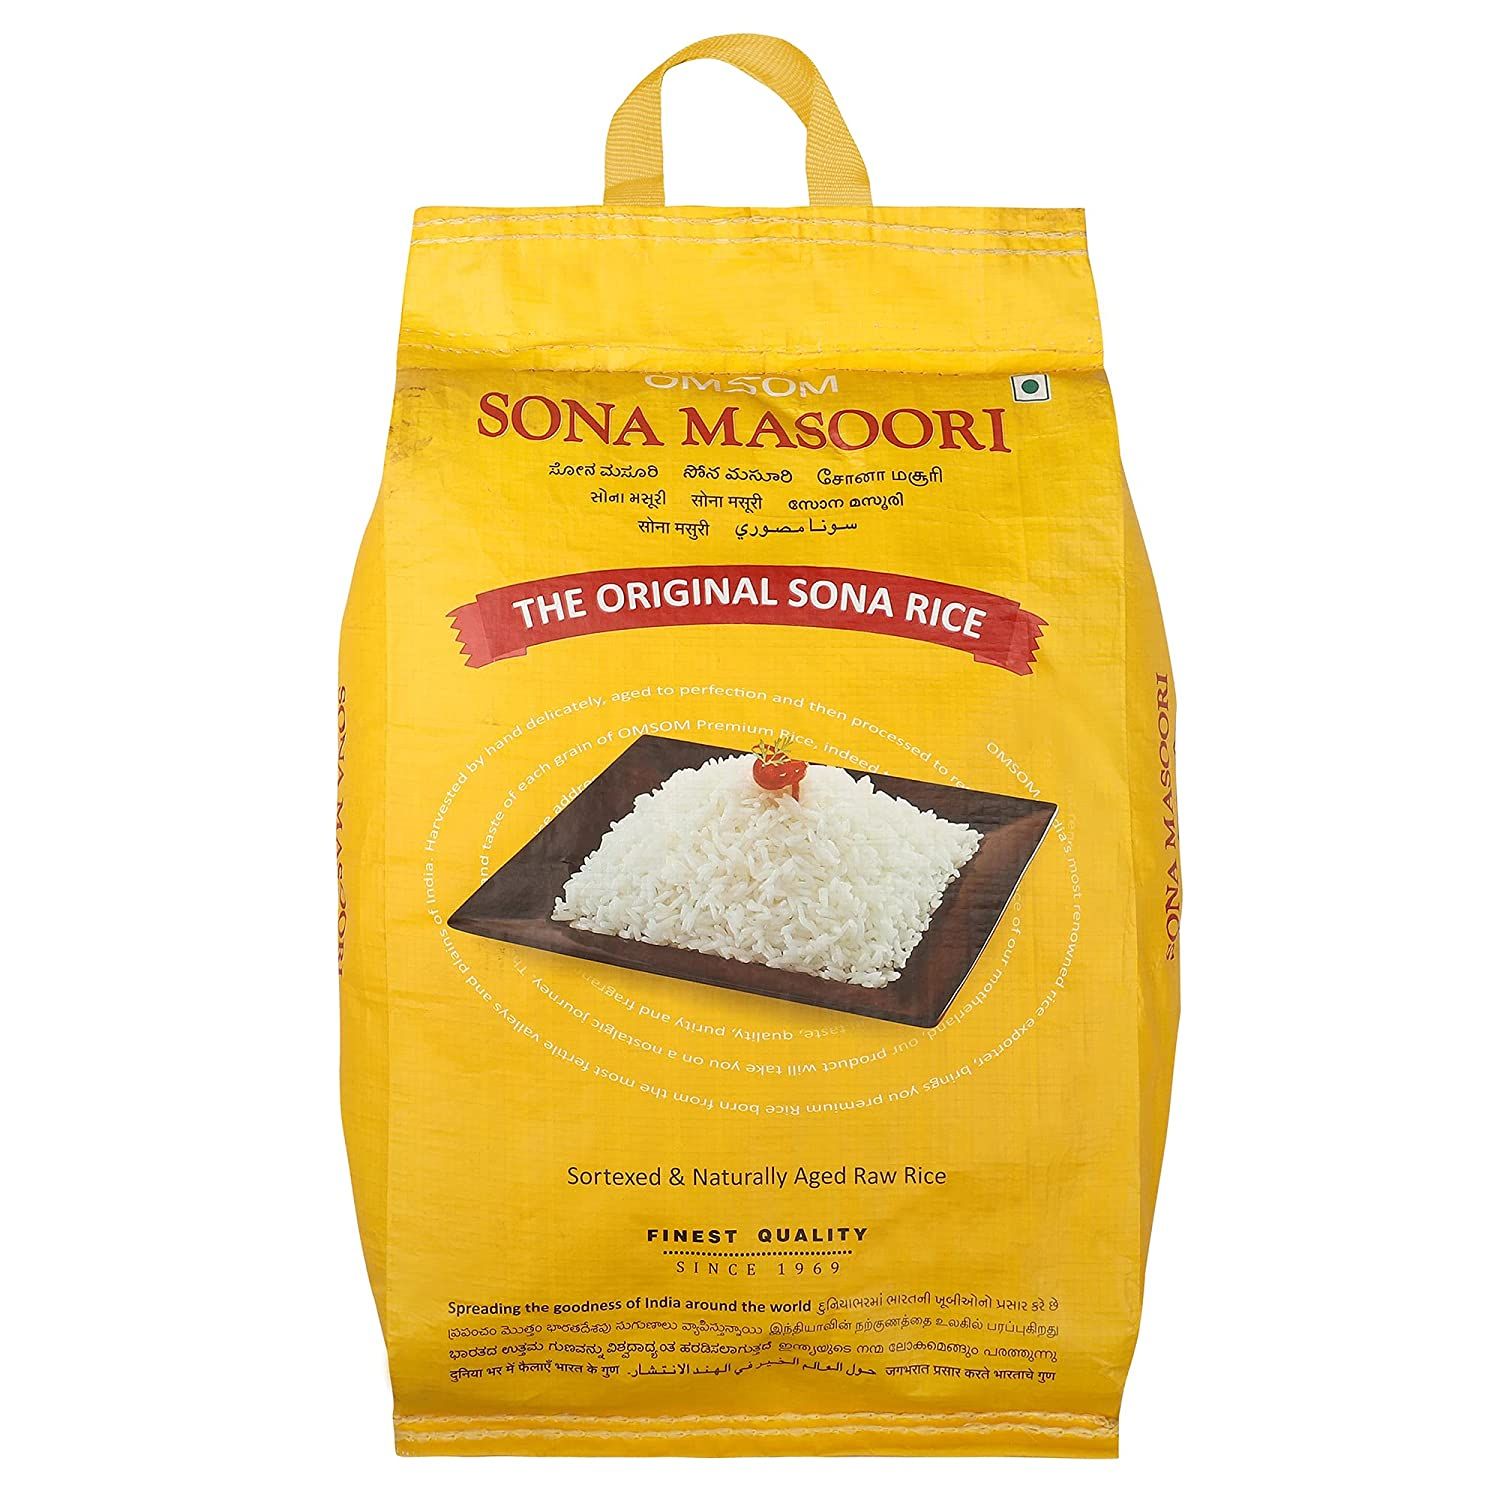 OMSOM SONA MASOORI RAW Rice Image